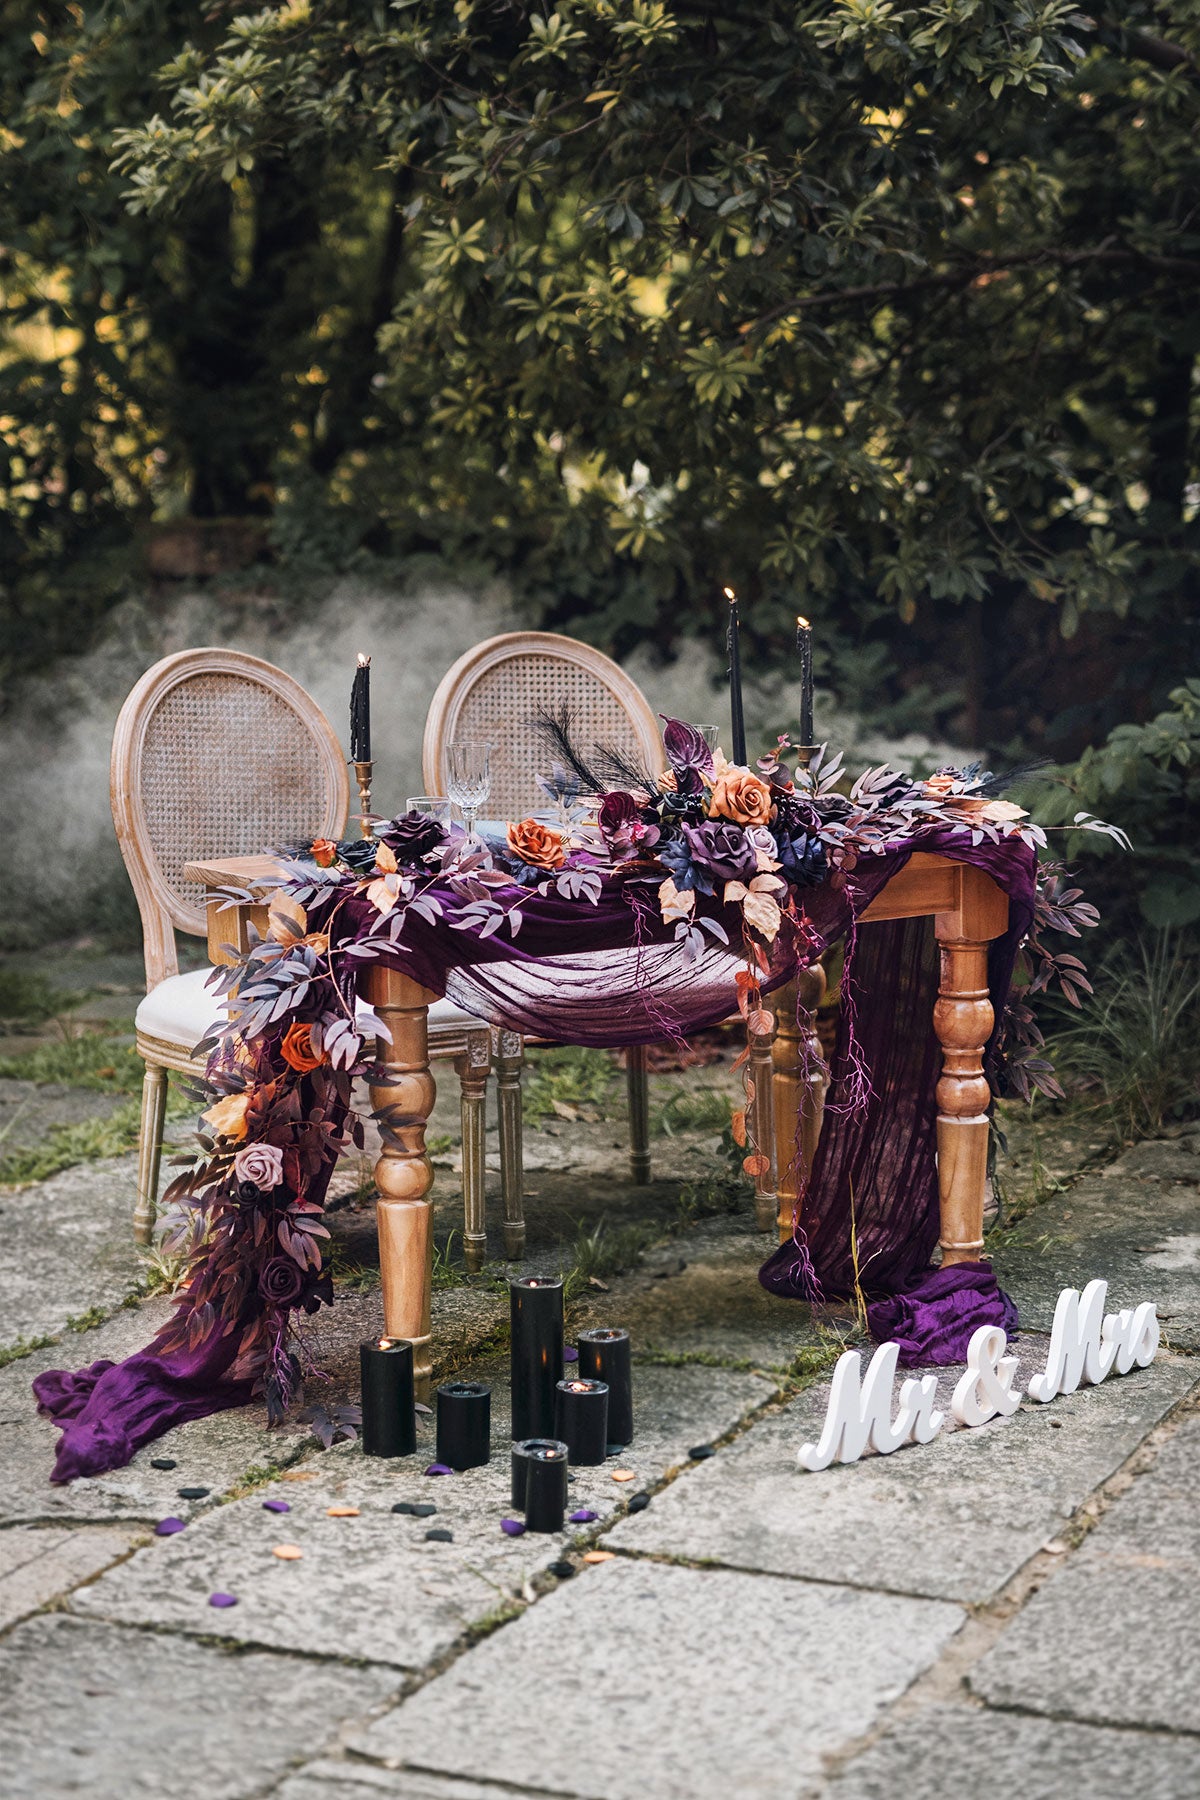 Pre-Arranged Wedding Flower Packages in Twilight Purple & Harvest Orange